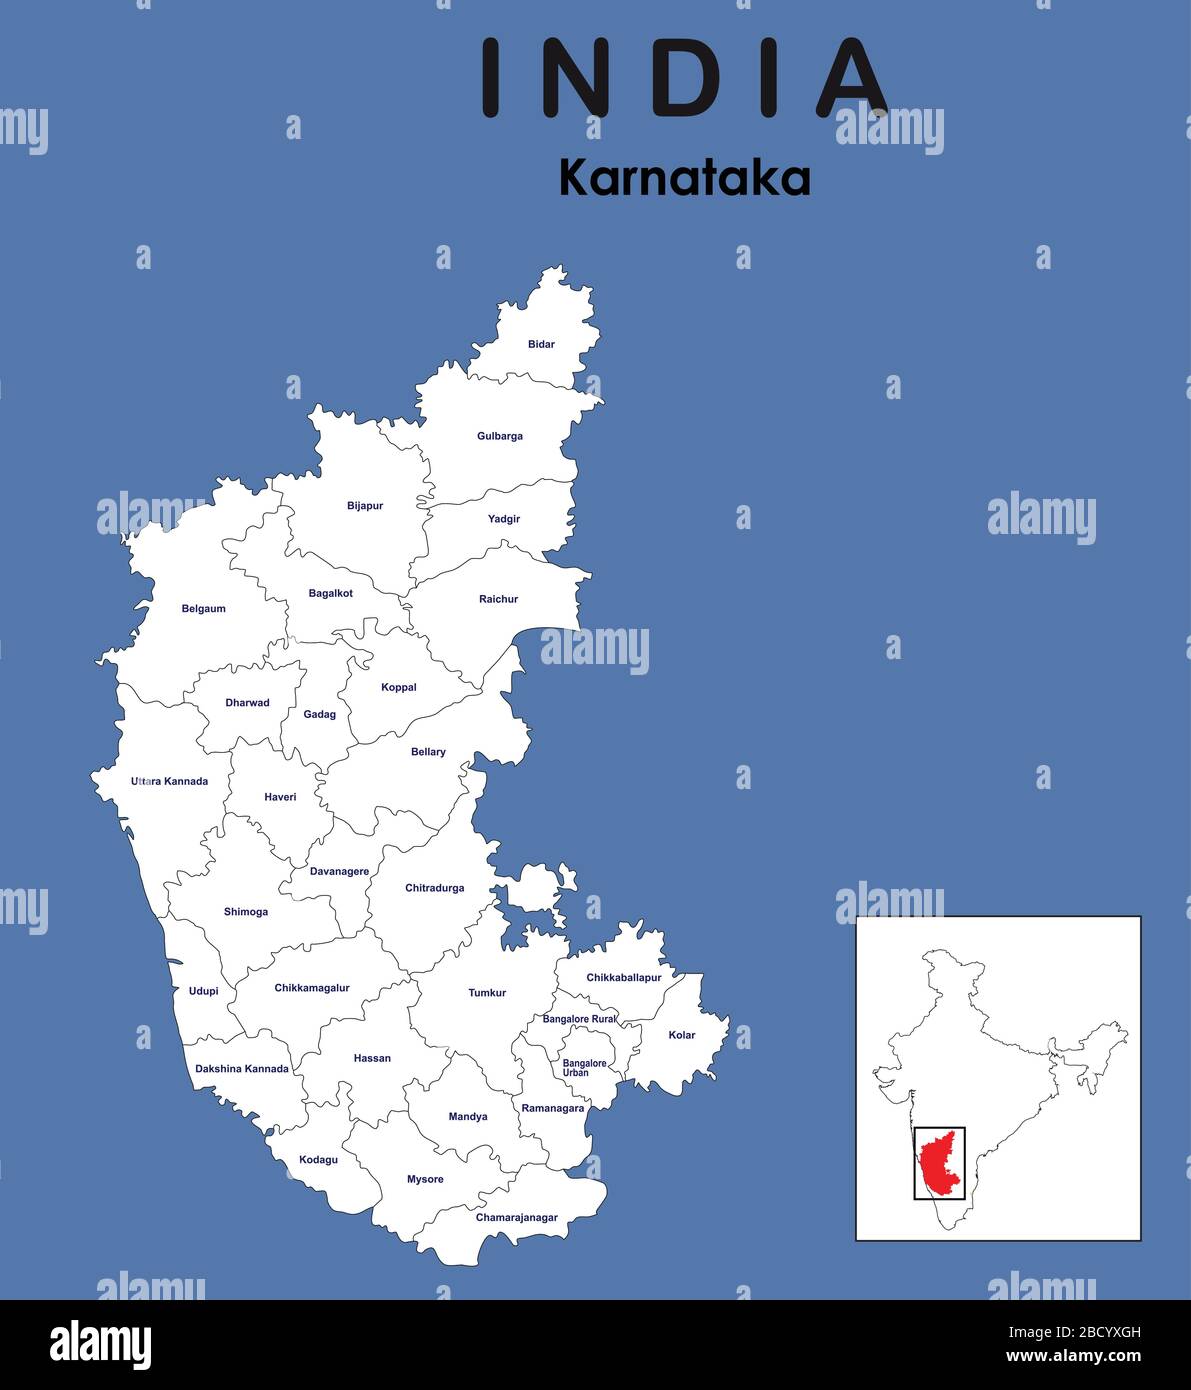 Karnataka full map. vector illustration of colourful district map ...